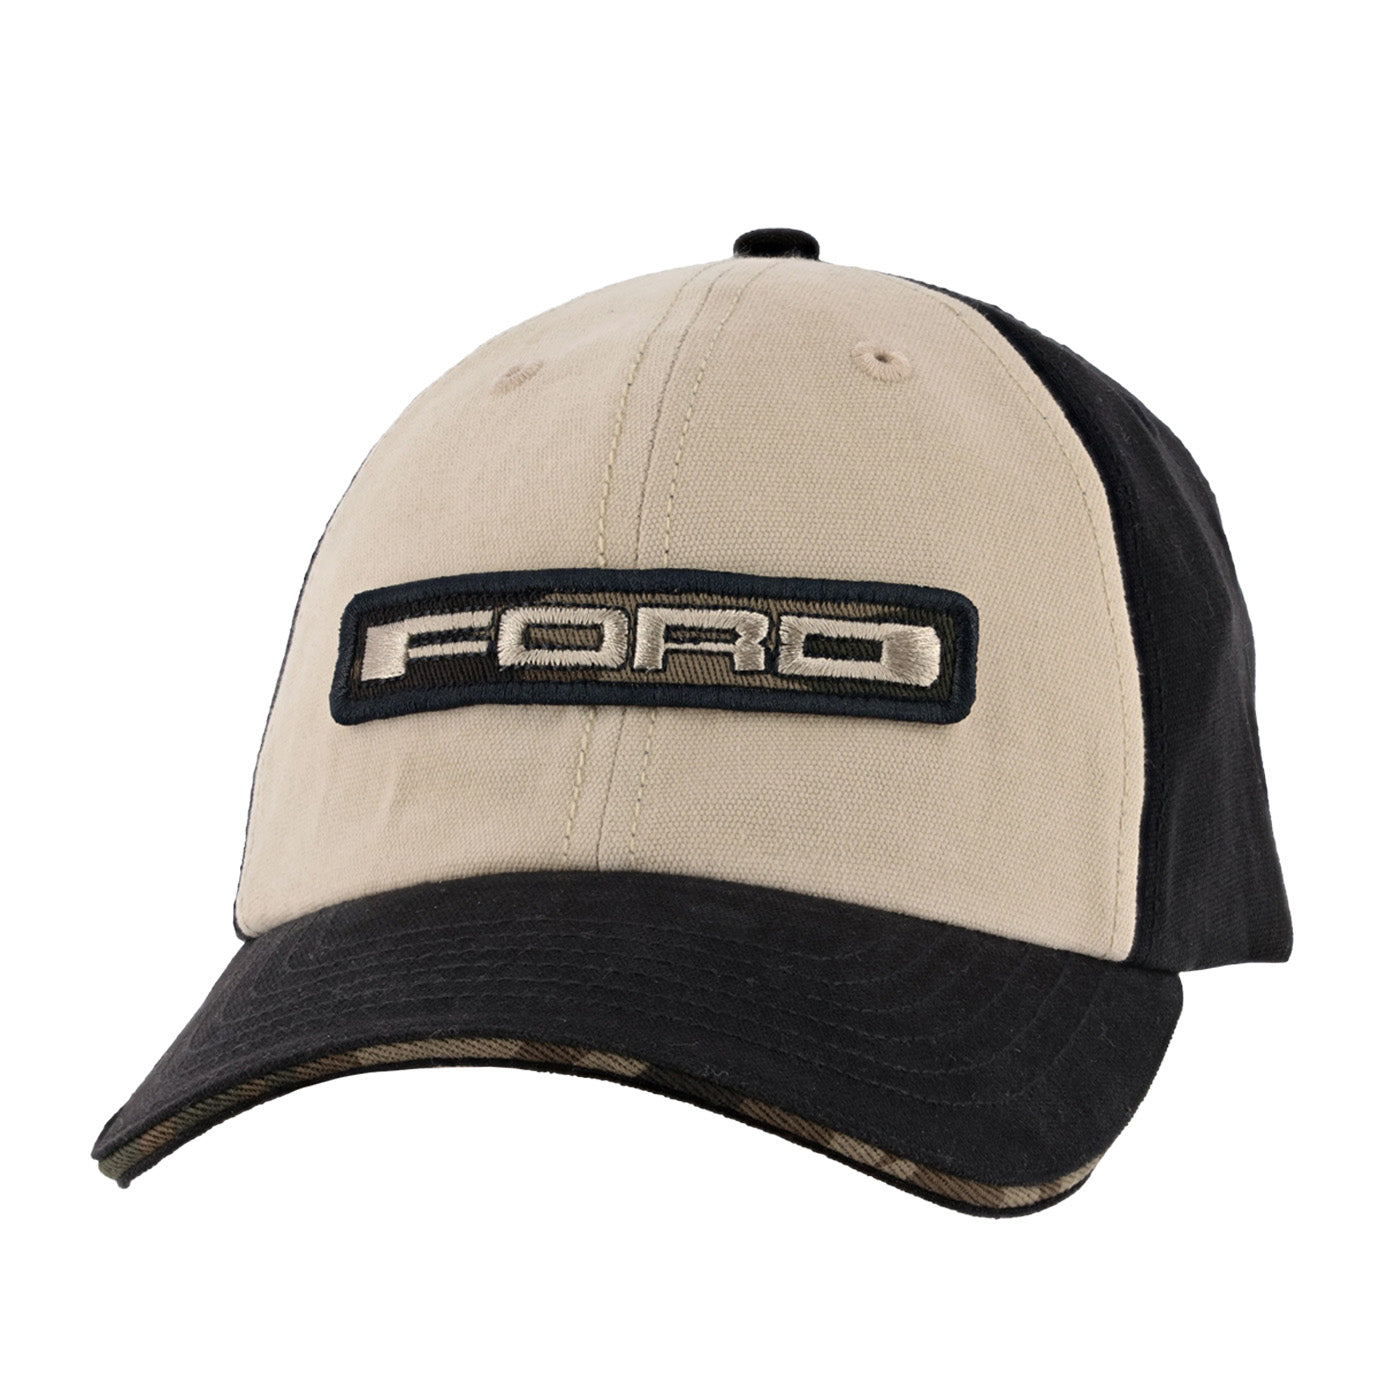 Ford Raptor Hat, F-150 Raptor Hat, F-150 Snapback Trucker cap, Trucker Hat